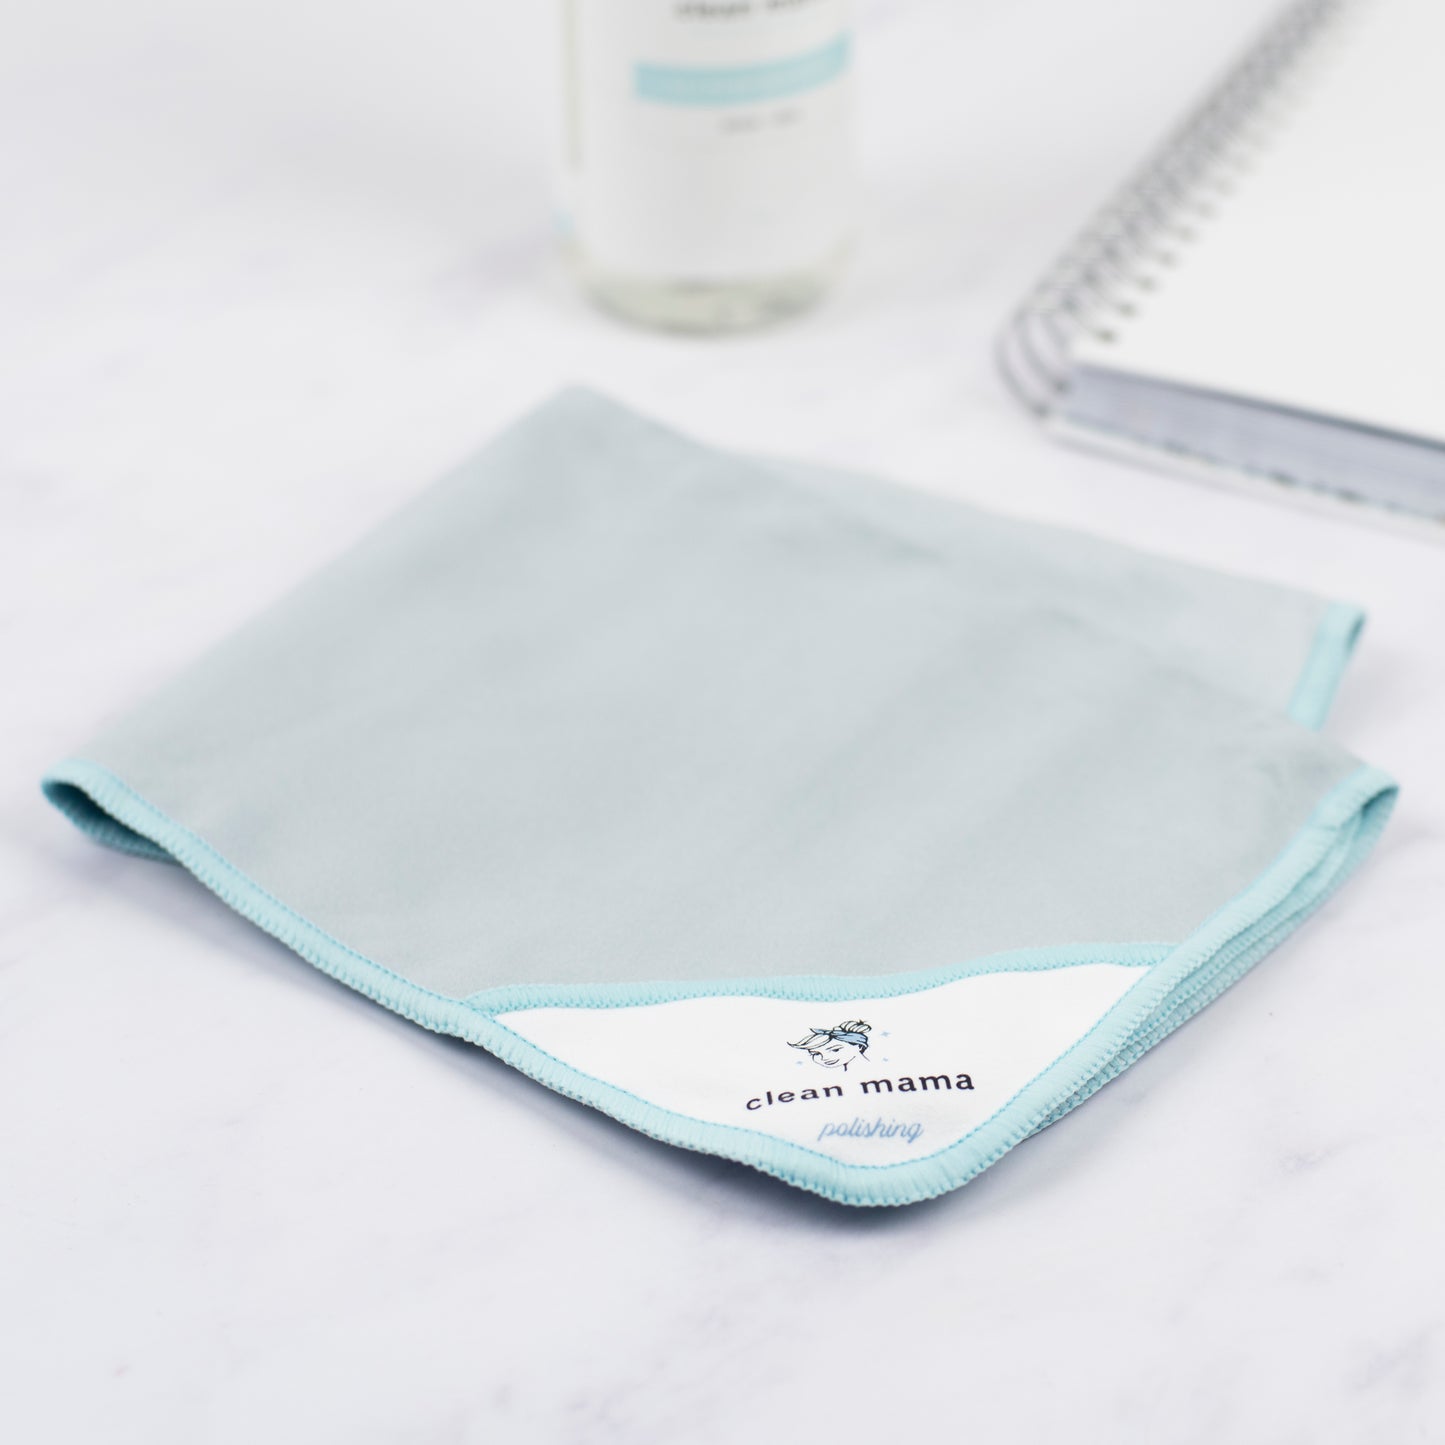 Microfiber Cleaning Cloth Bundle – Set of 12